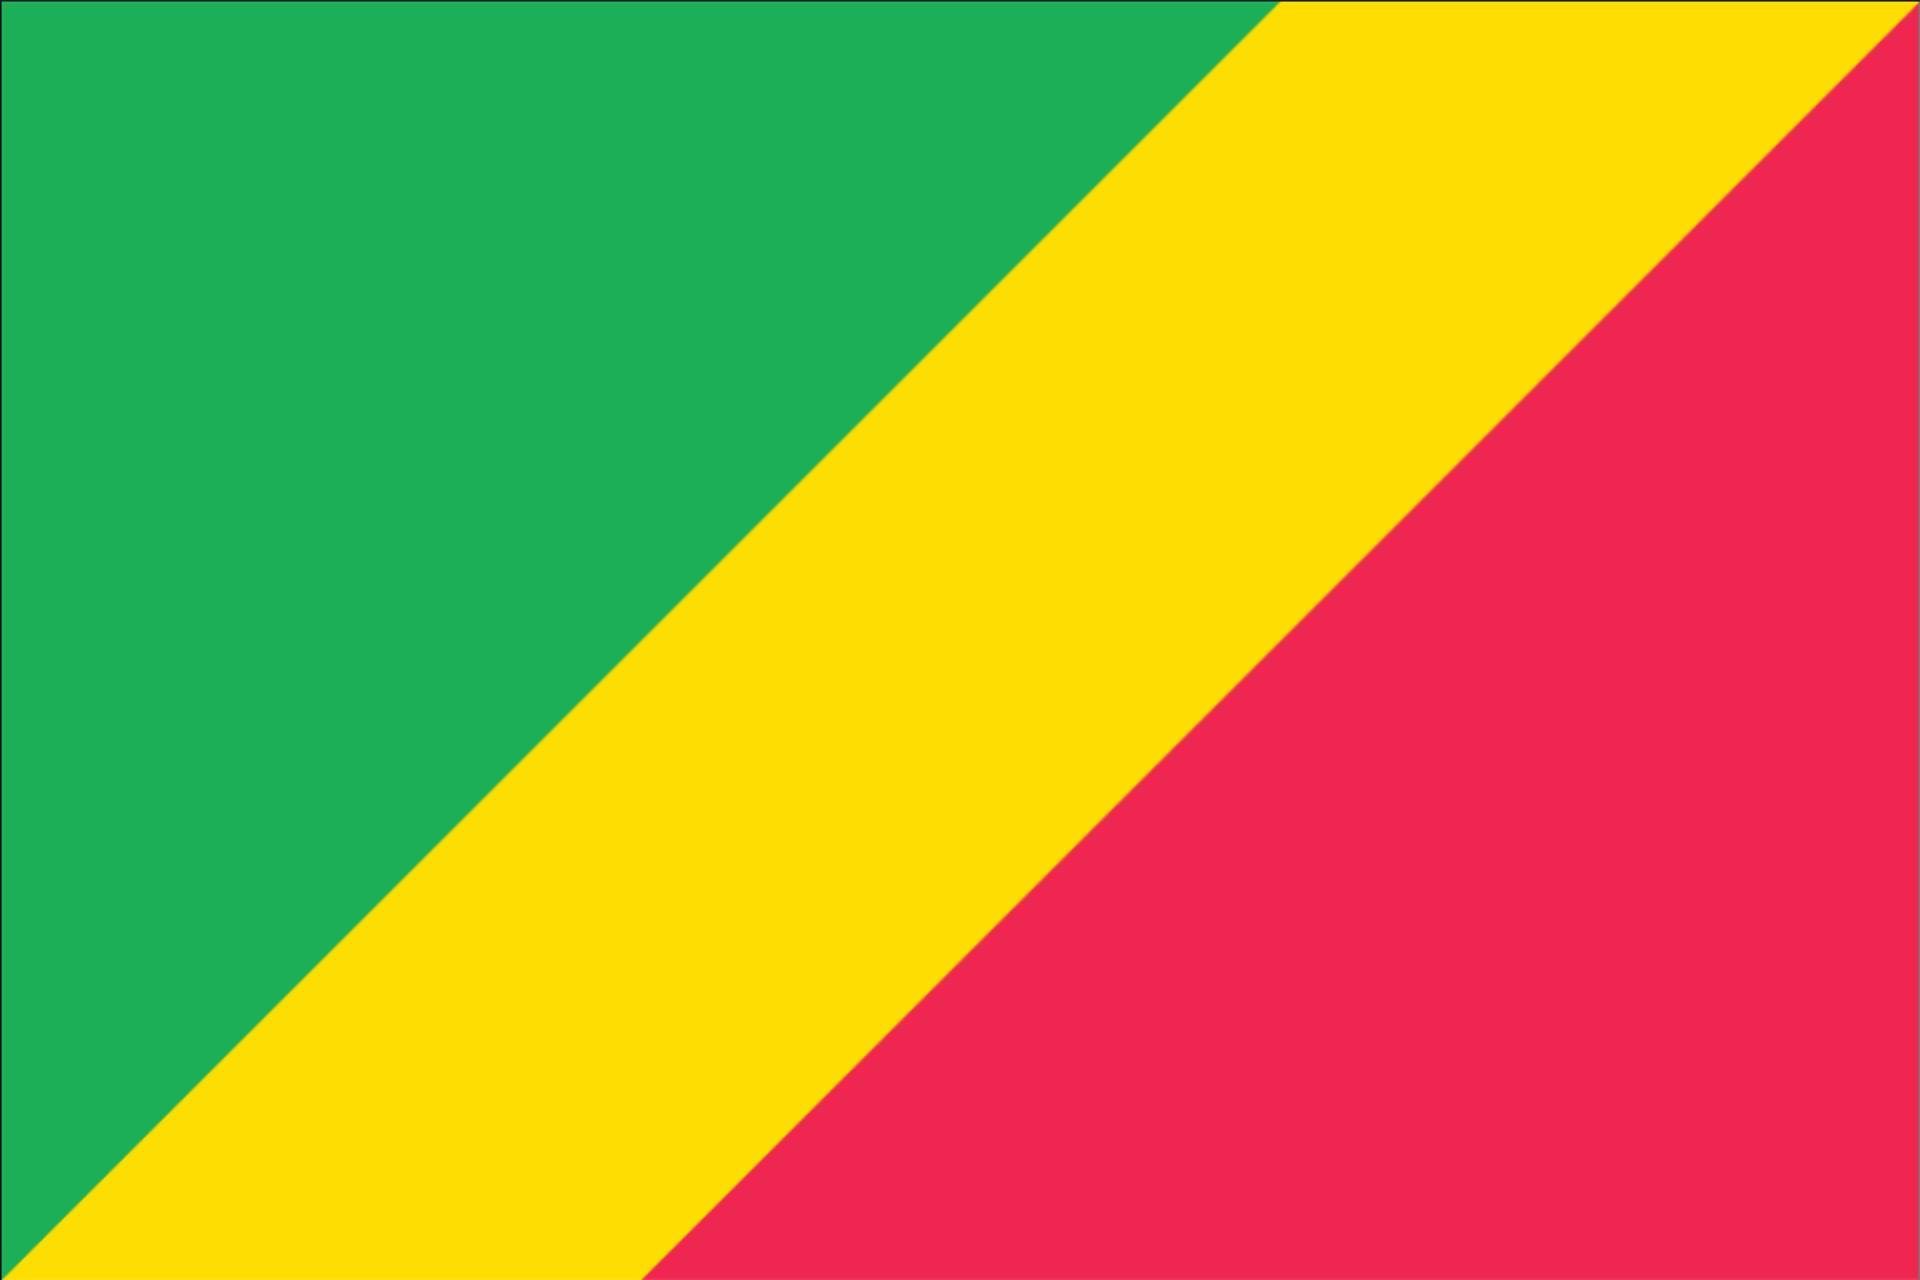 80 (Brazzaville) Kongo, Republik Flagge g/m² flaggenmeer